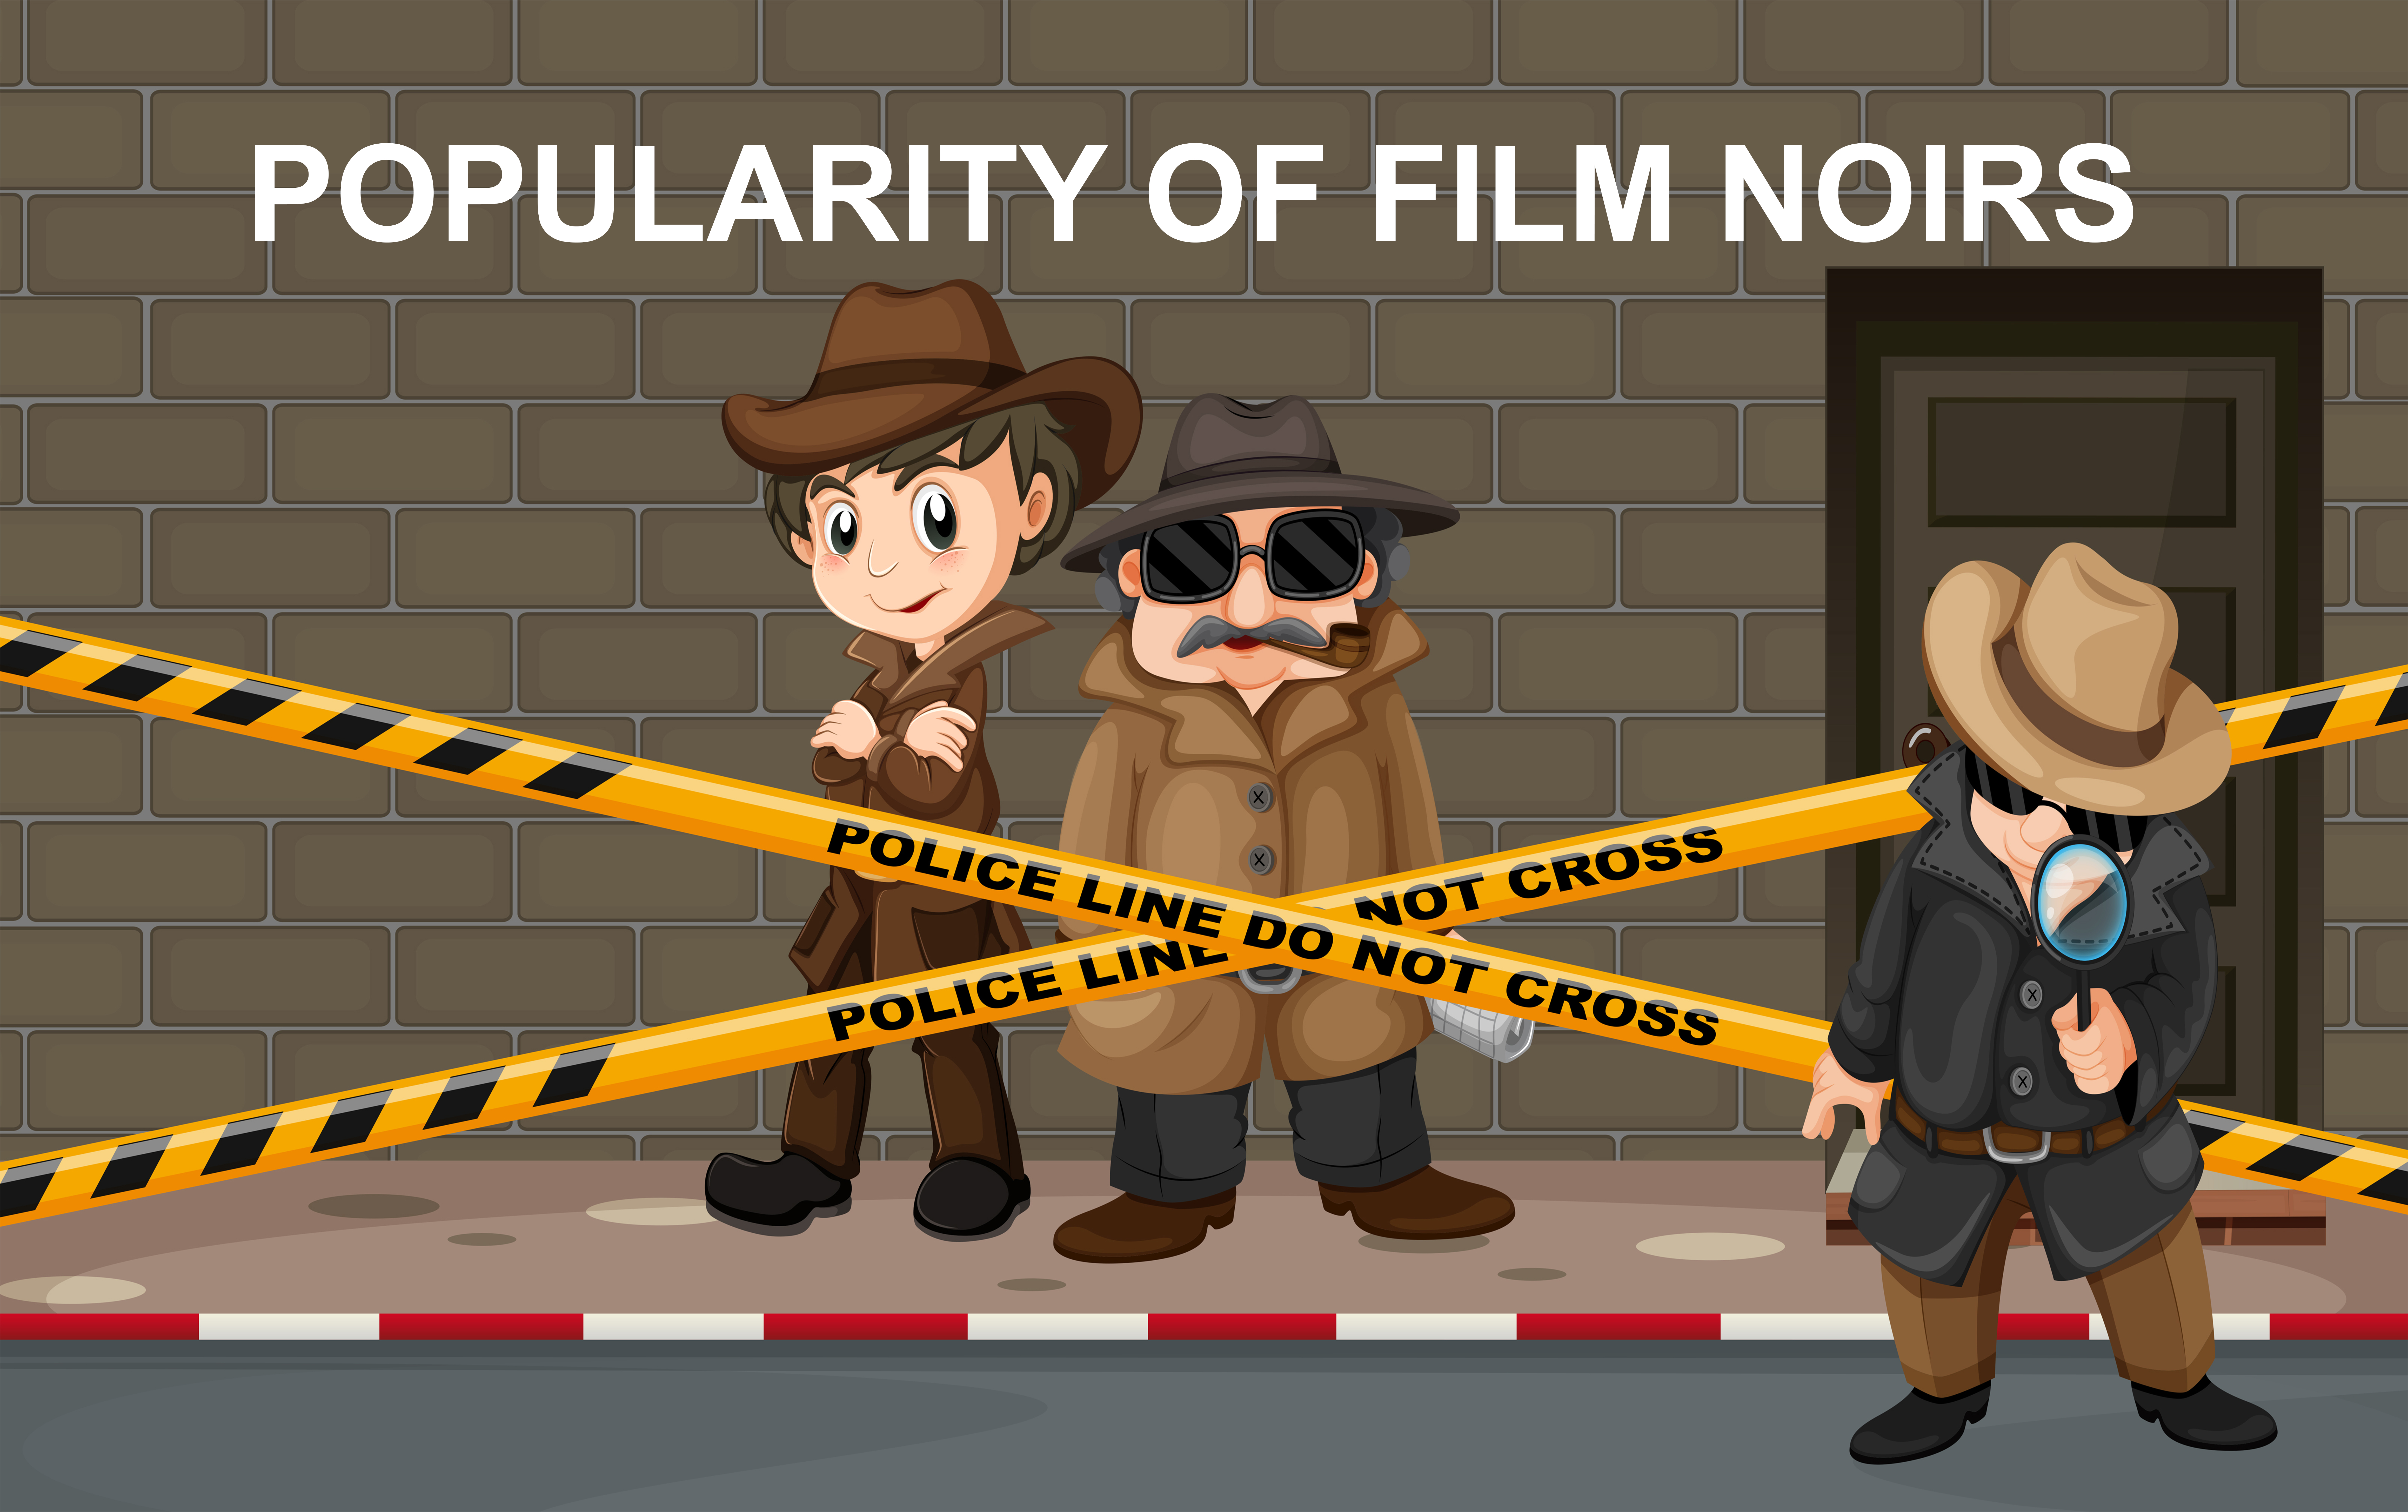 The Popularity of Film Noir